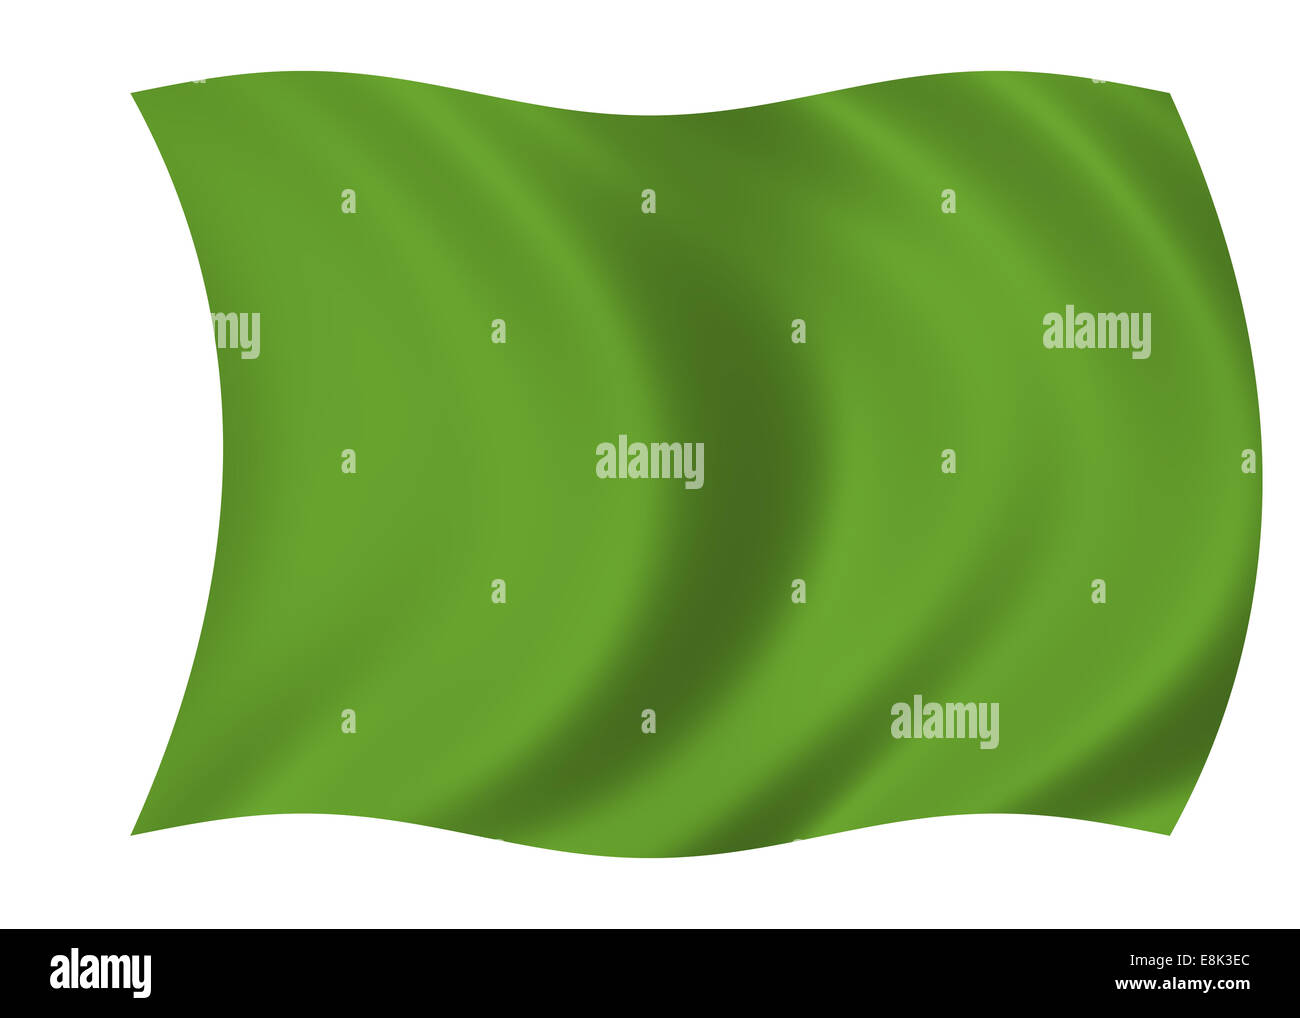 green-isolated-blank-flag-banner-against-white-background-stock-photo